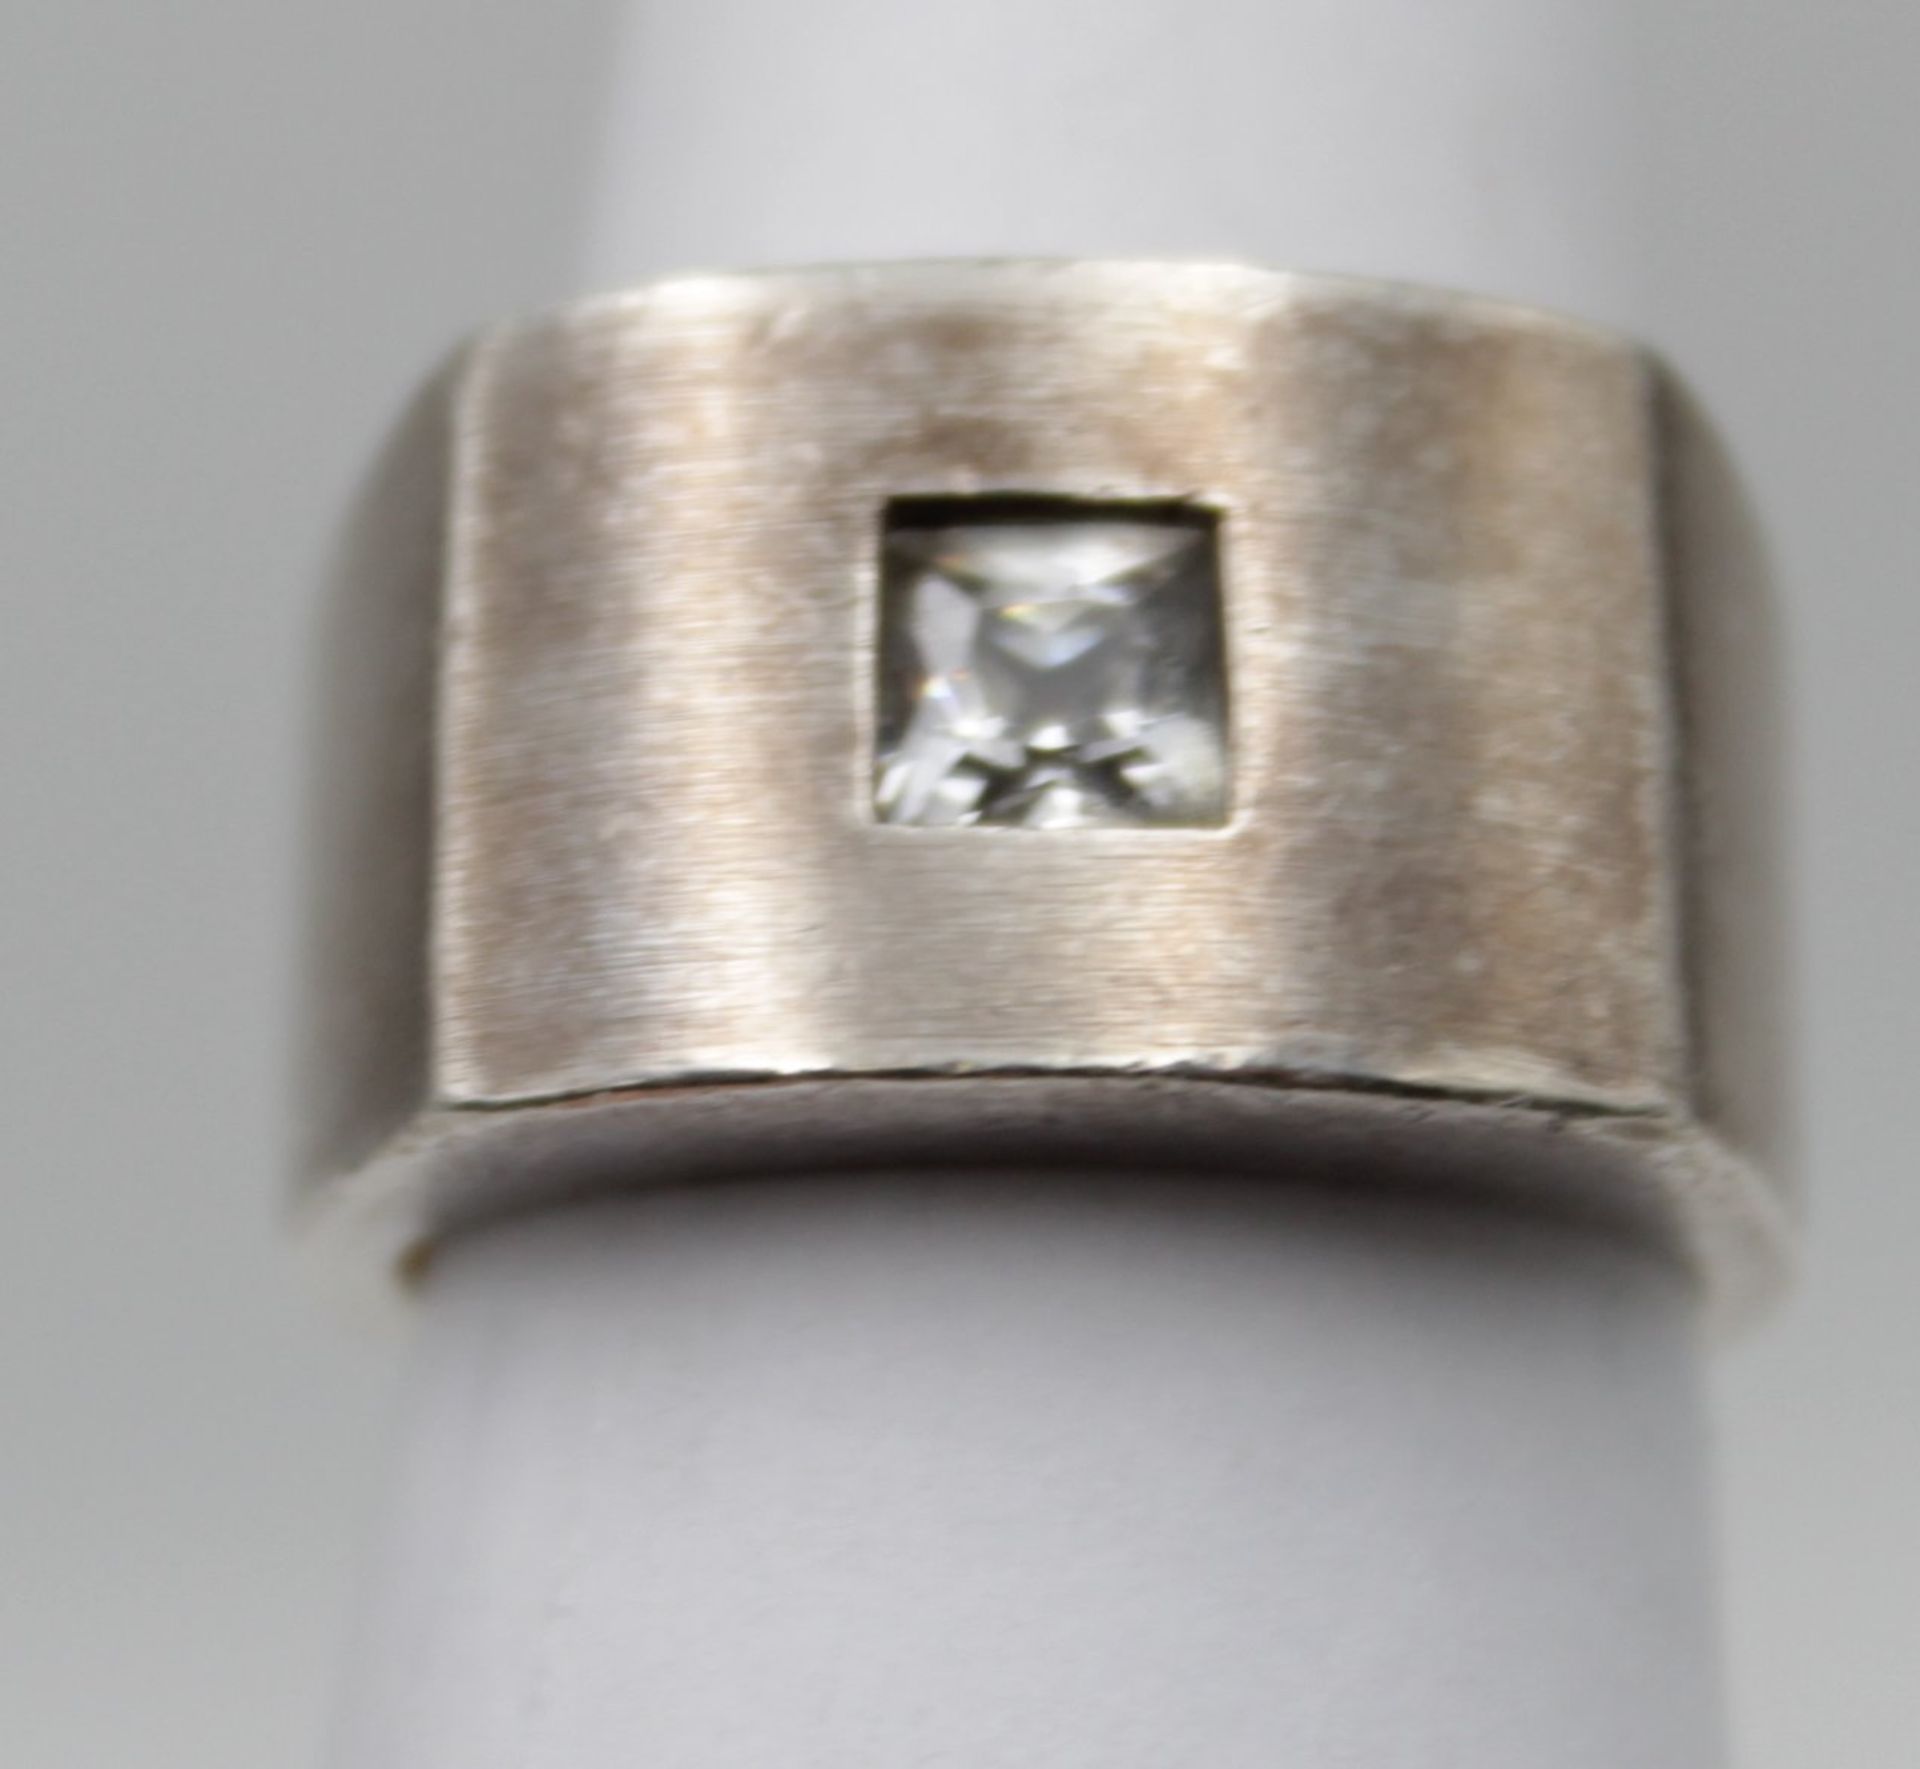 schwerer 925er Silber-Ring, klarer Solitärstein, 11,2gr., RG 55. - Bild 3 aus 5